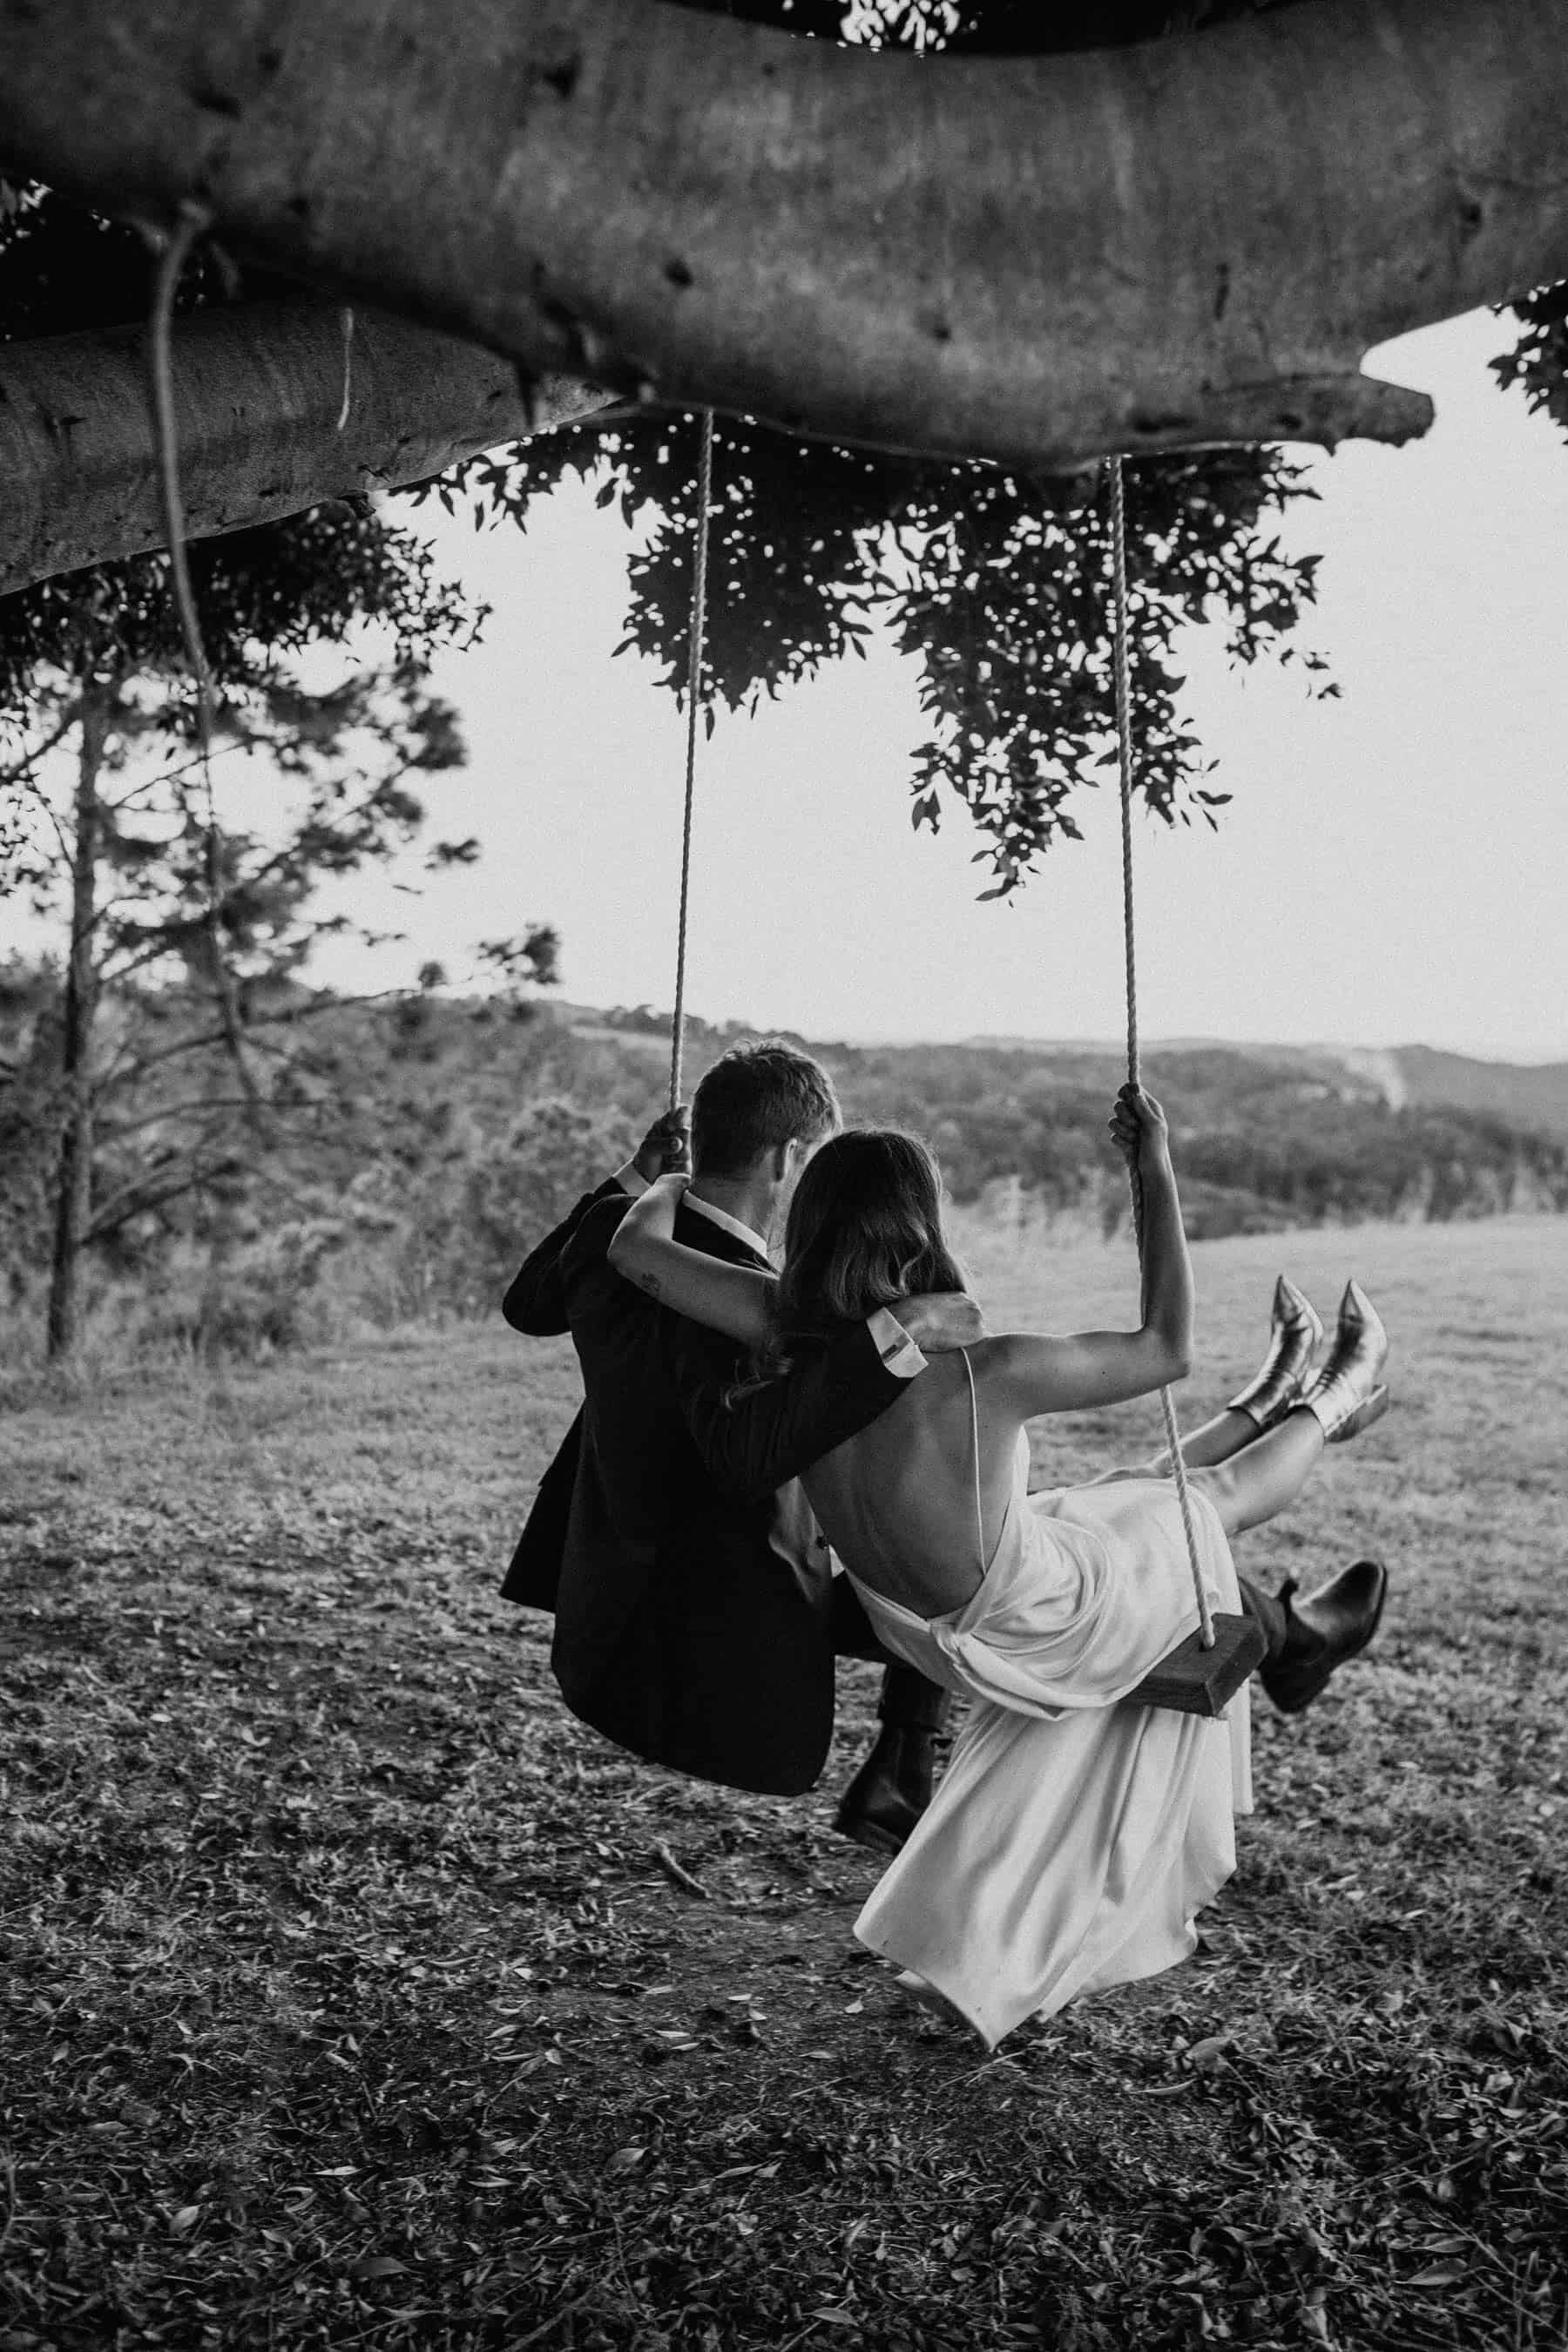 bride and groom on swing